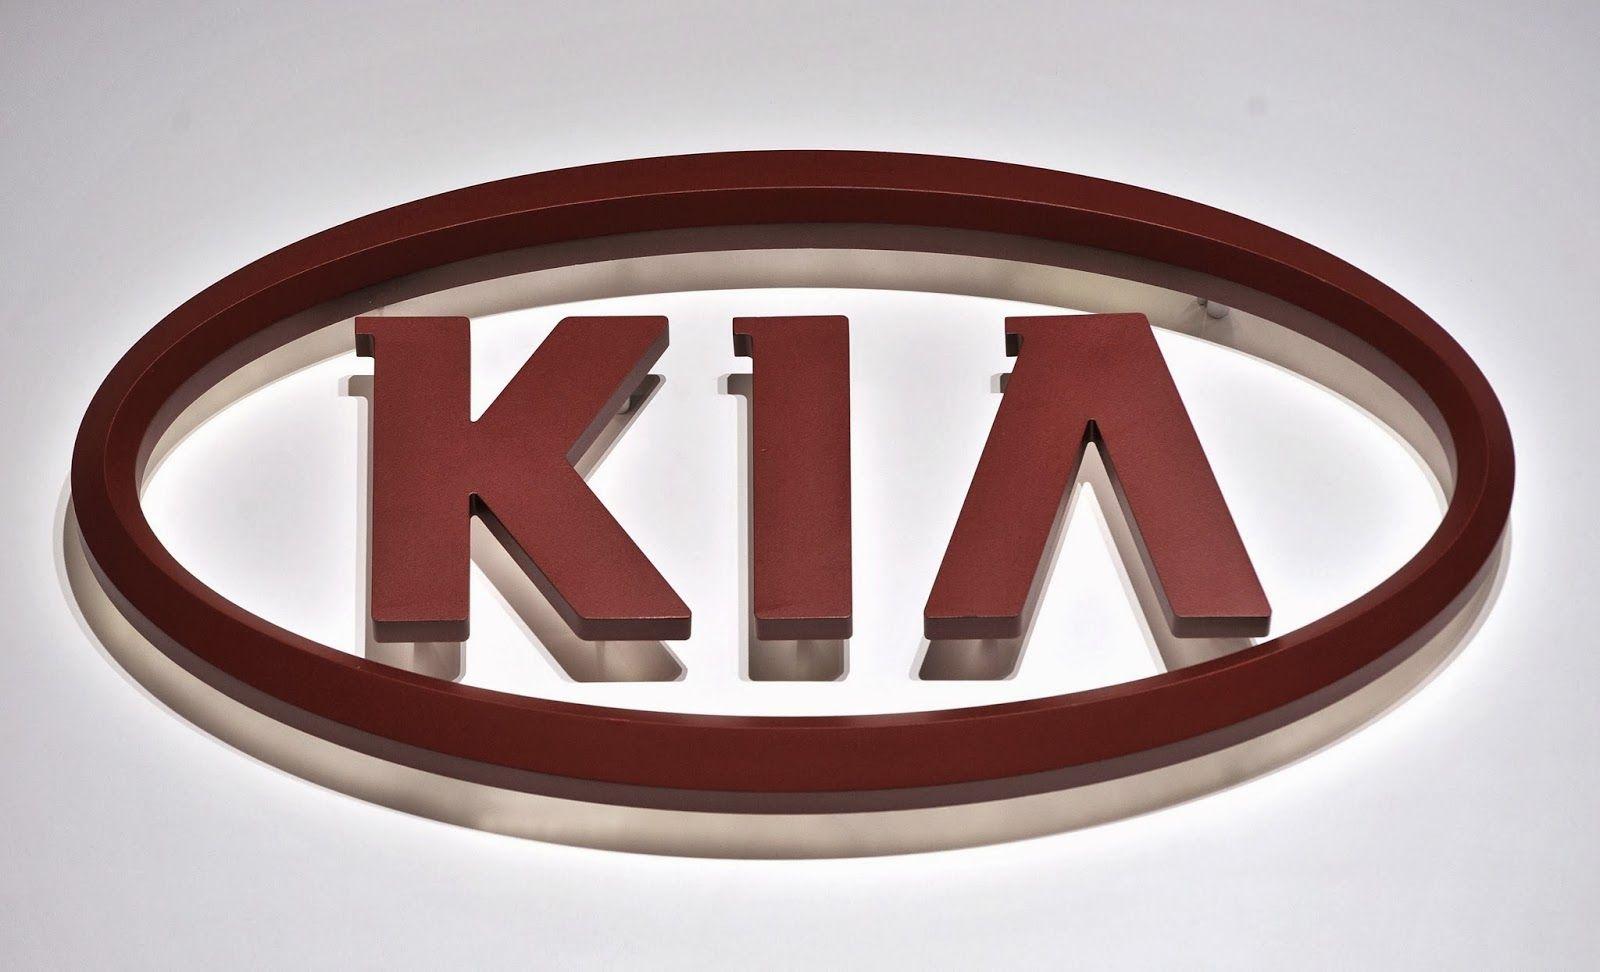 Car with Red Oval Logo - Kia Logo, Kia Car Symbol Meaning and History | Car Brand Names.com